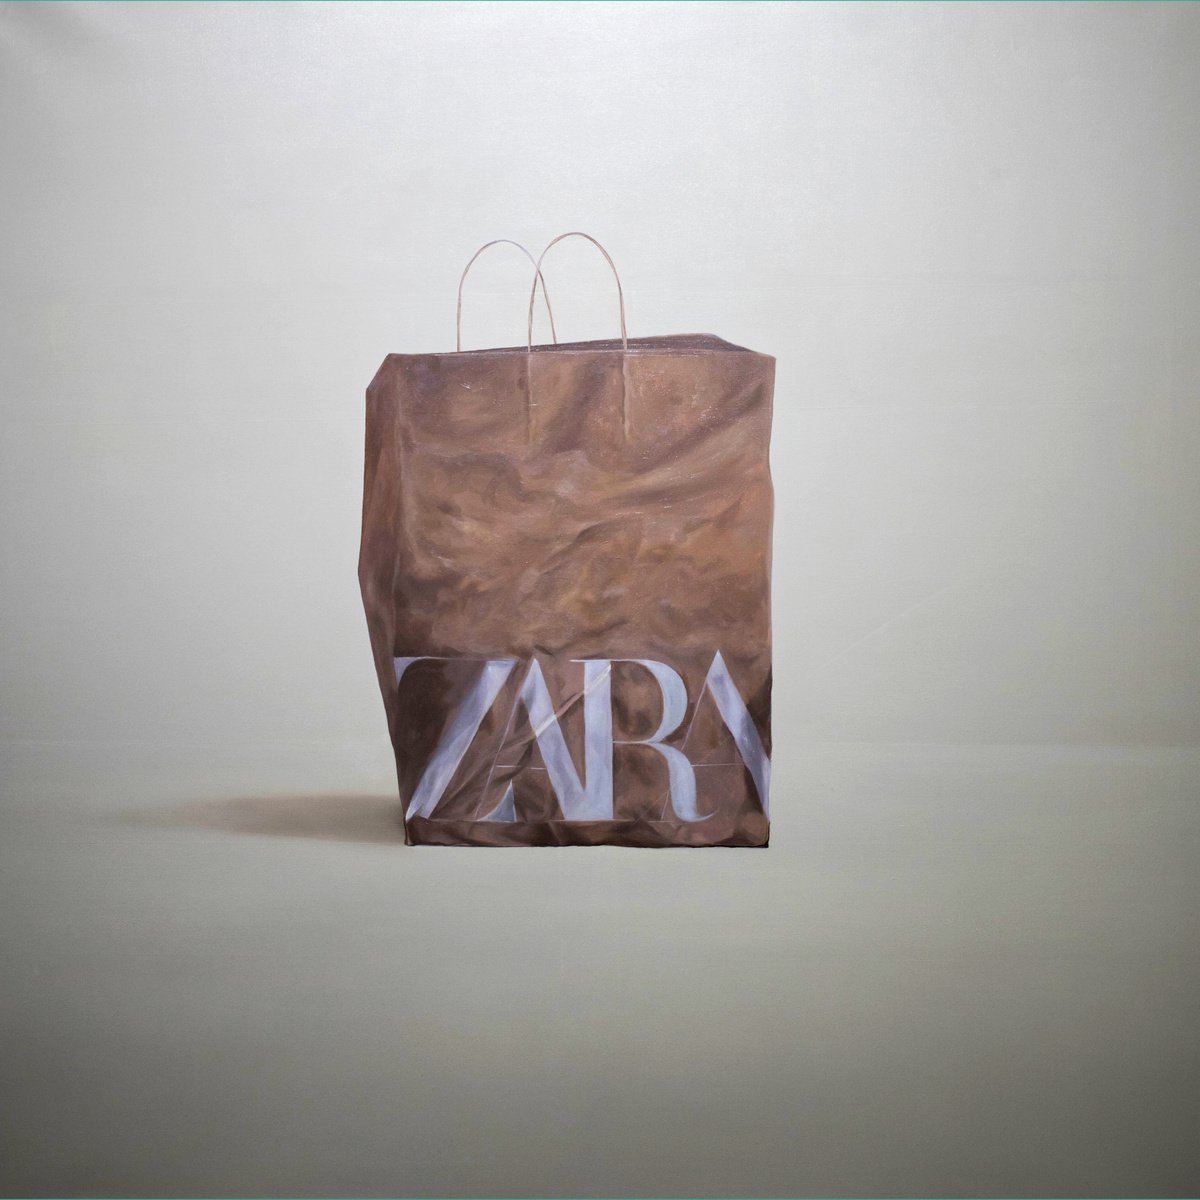 ZARA SHOPPING BAG by Gennaro Santaniello